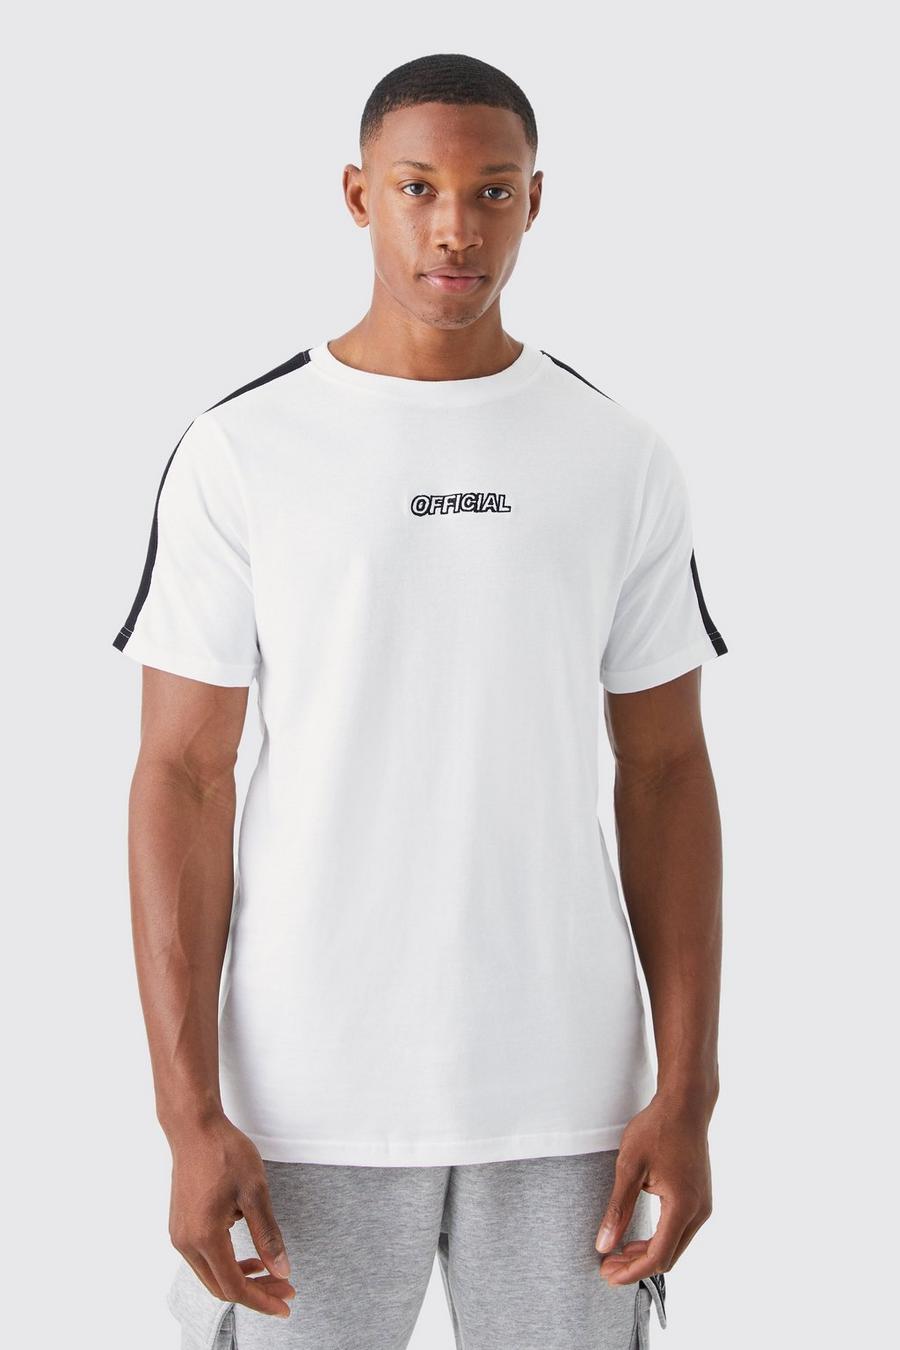 Official T-Shirt mit Streifen-Detail, White image number 1